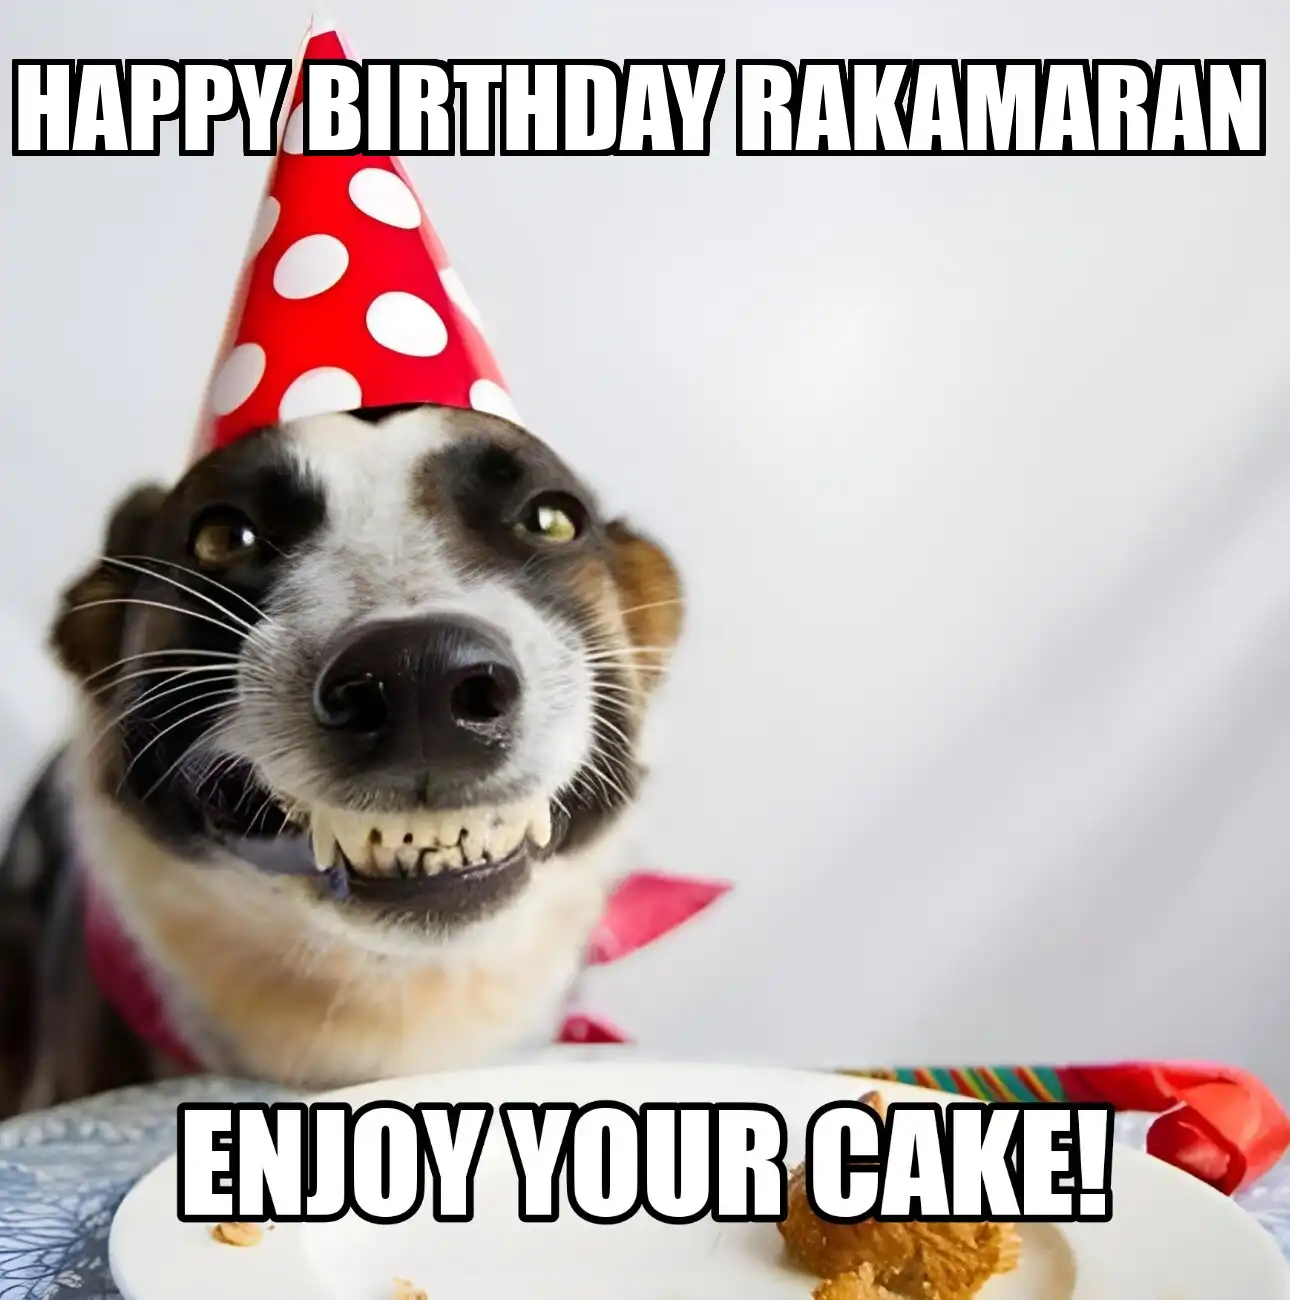 Happy Birthday Rakamaran Enjoy Your Cake Dog Meme